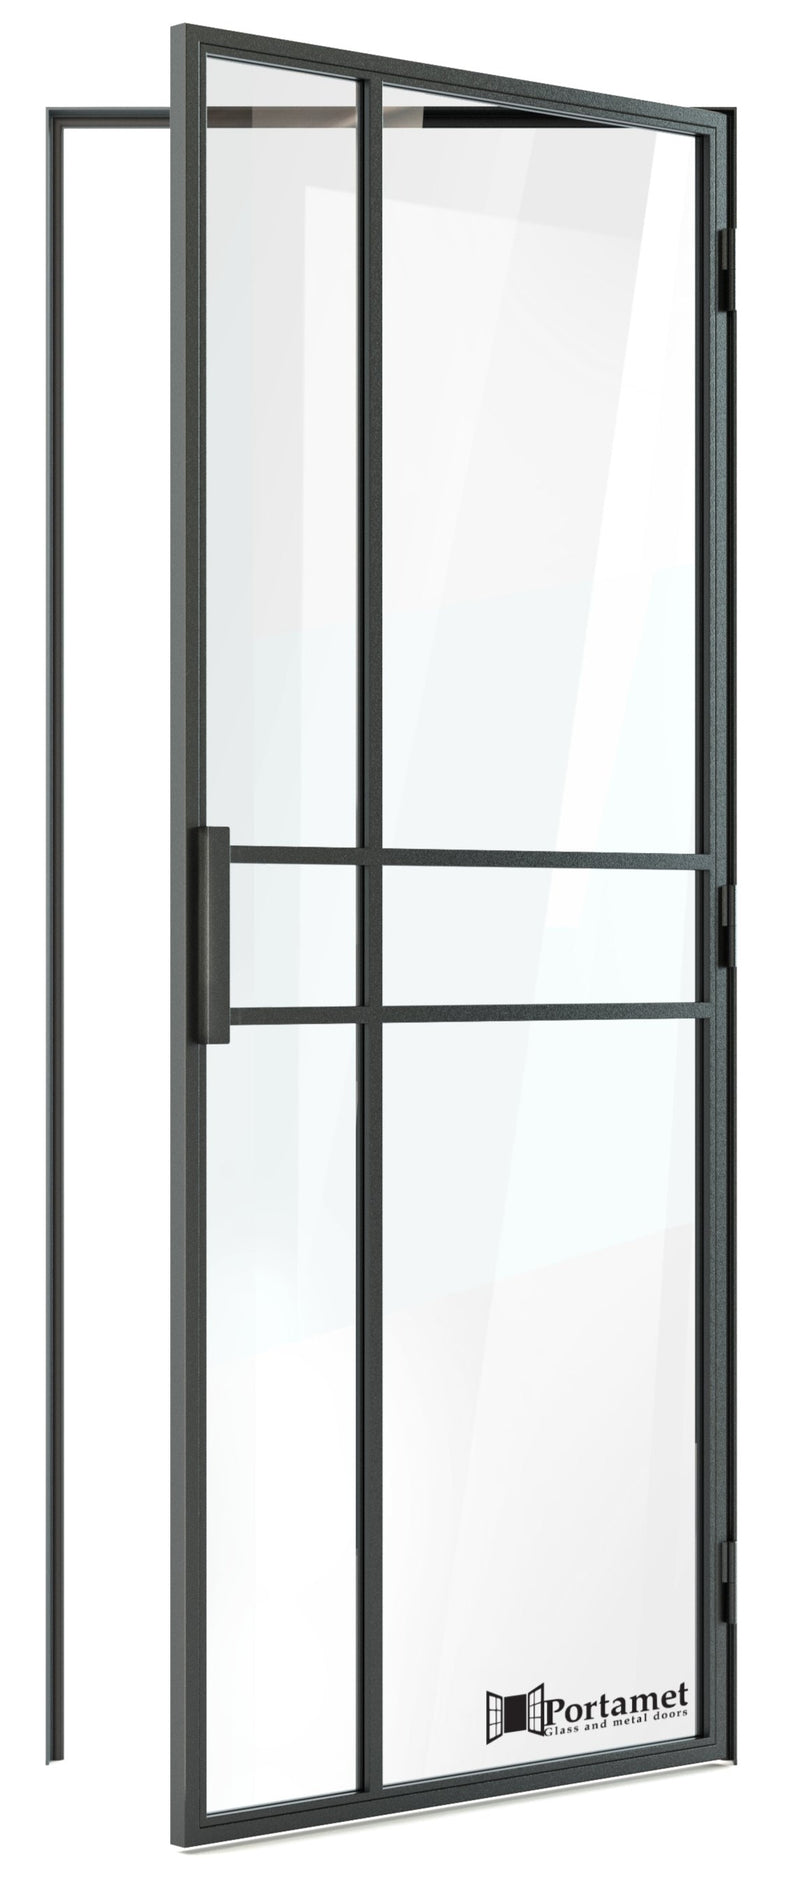 Portamet by Sfarzo - Paris Classic Single Glazed Steel Hinged Door with Frame